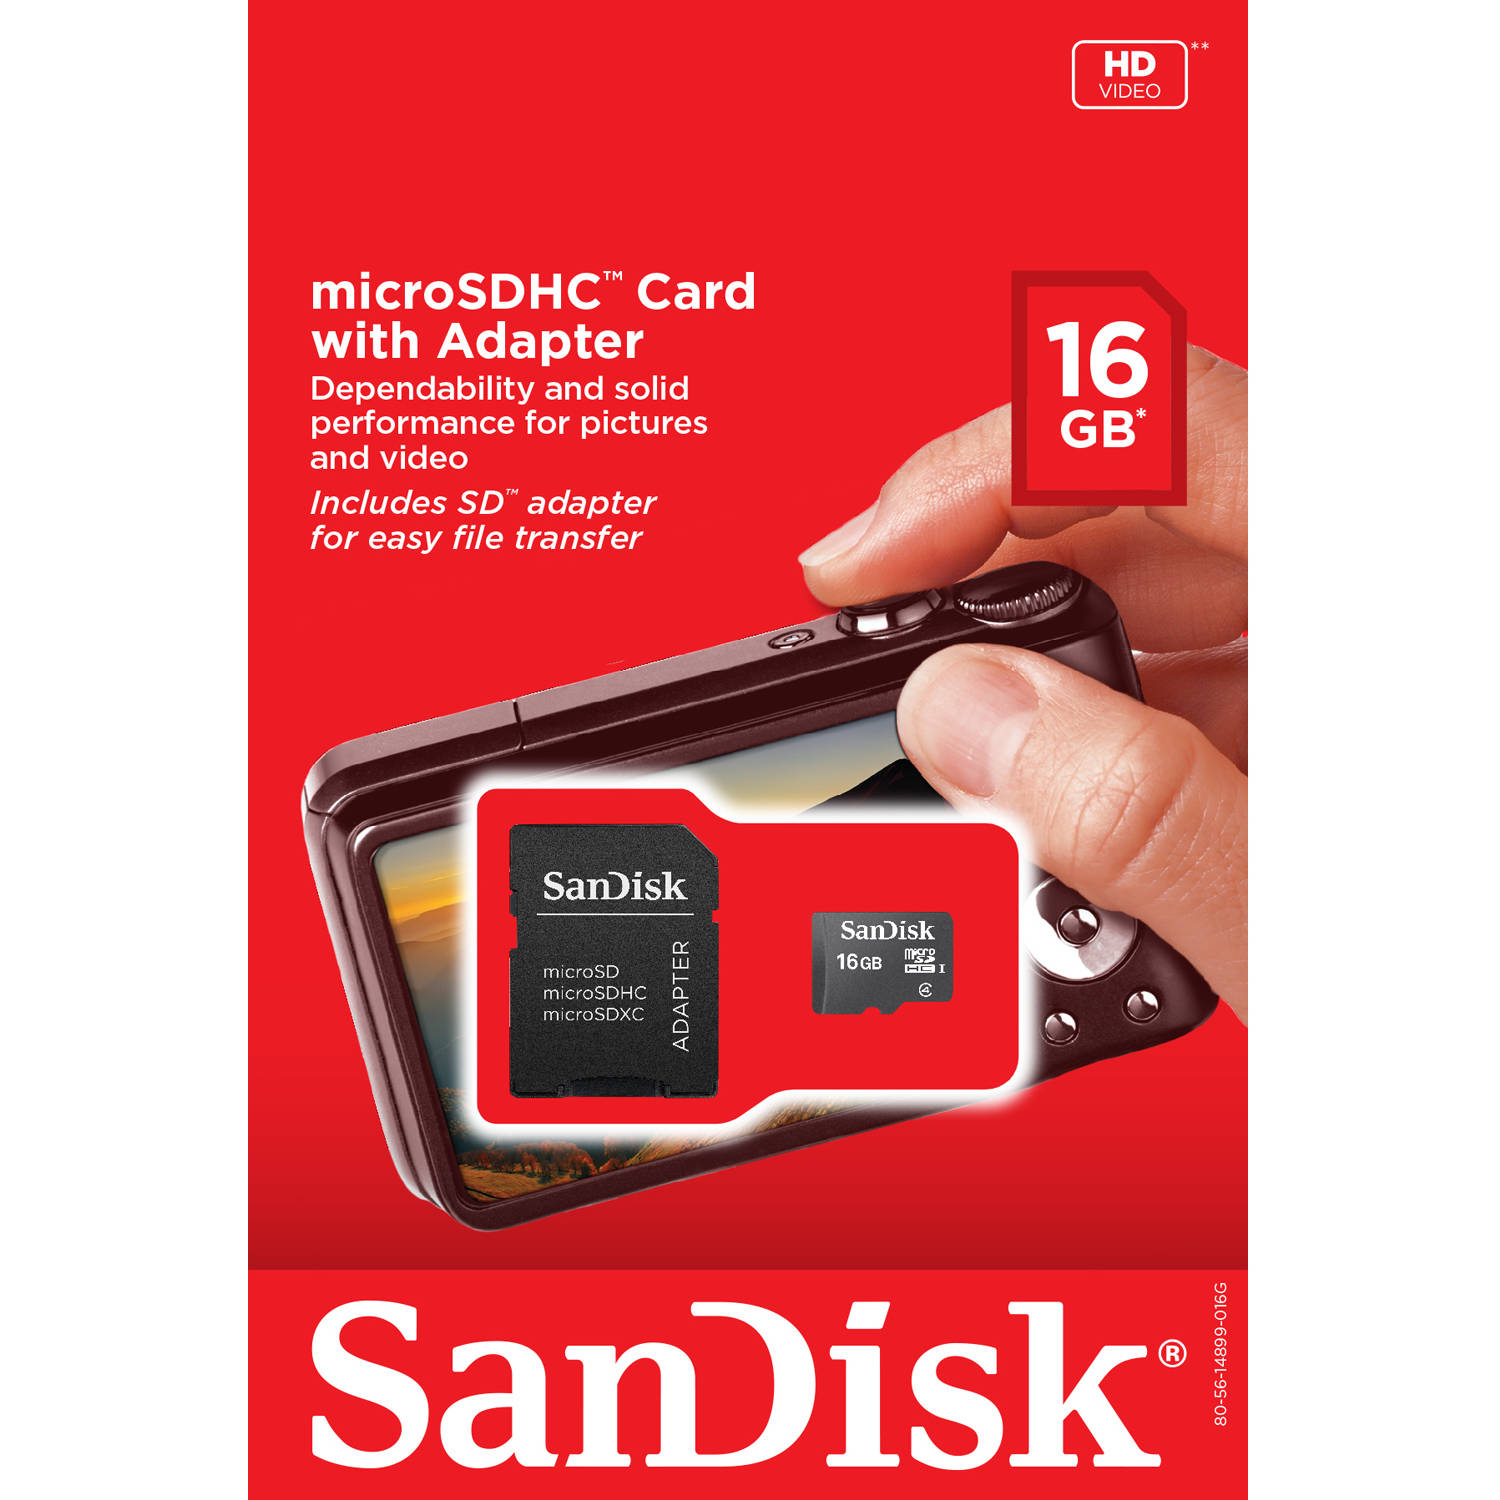 Sandisk 16gb Memory Card Microsd Hc Sd Adapter